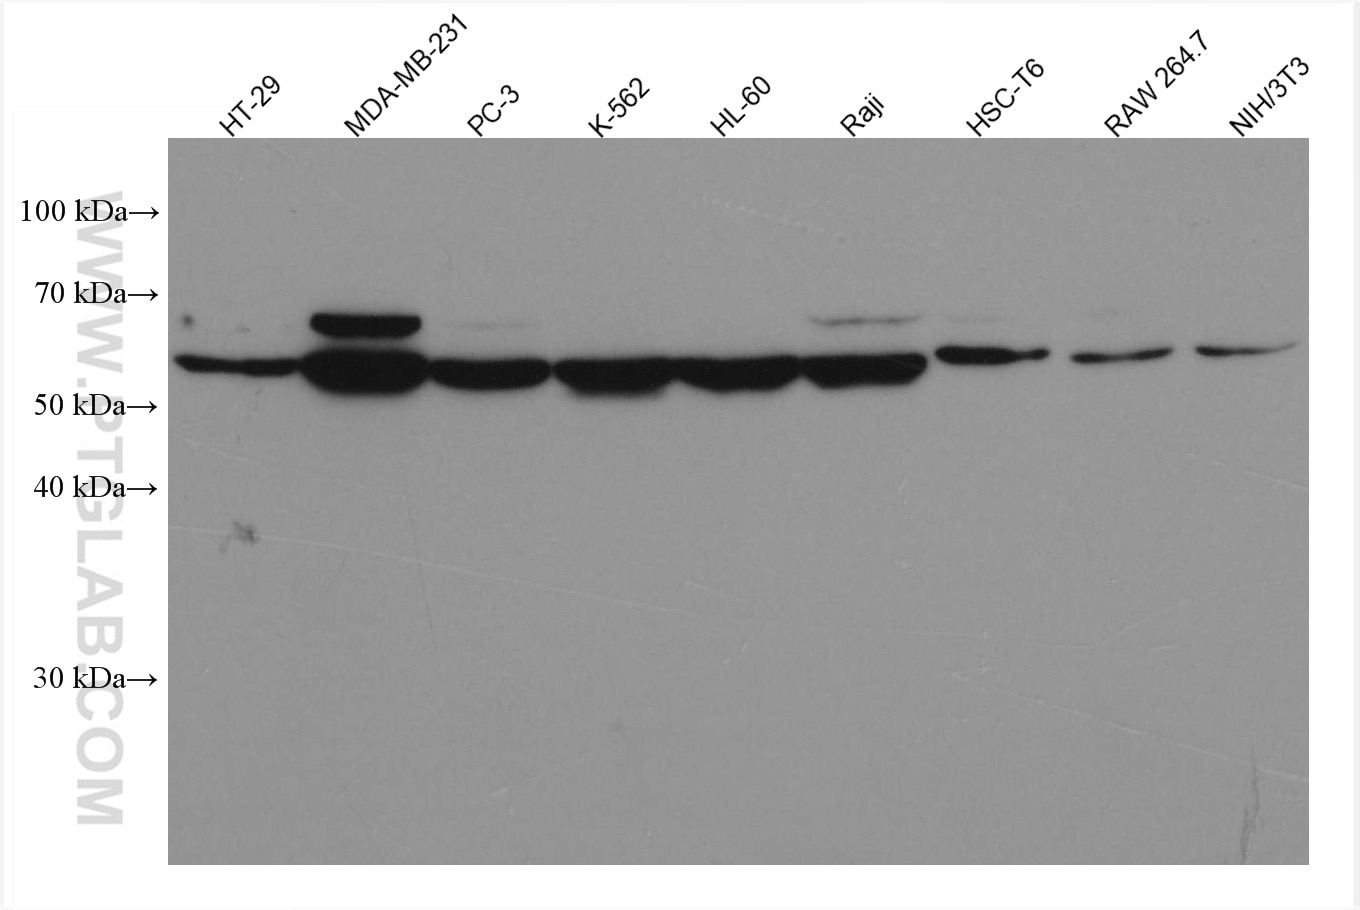 Western Blot (WB) analysis of various lysates using c-MYC Monoclonal antibody (67447-1-Ig)